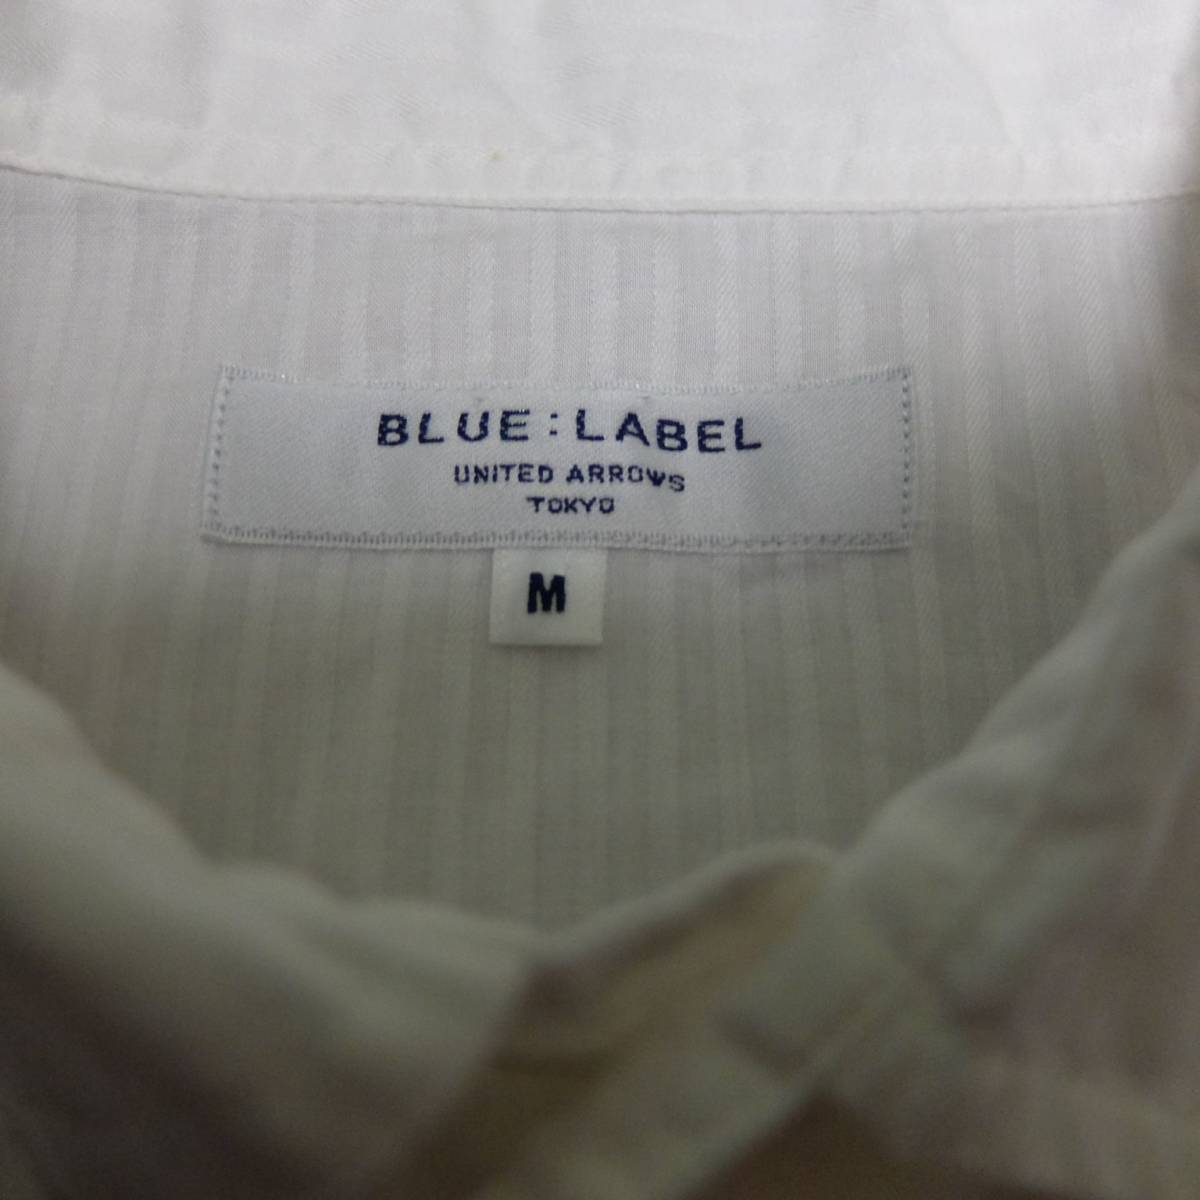 yunaitedo Arrows Blue Label short sleeves shirt M made in Japan UNITED ARROWS used 